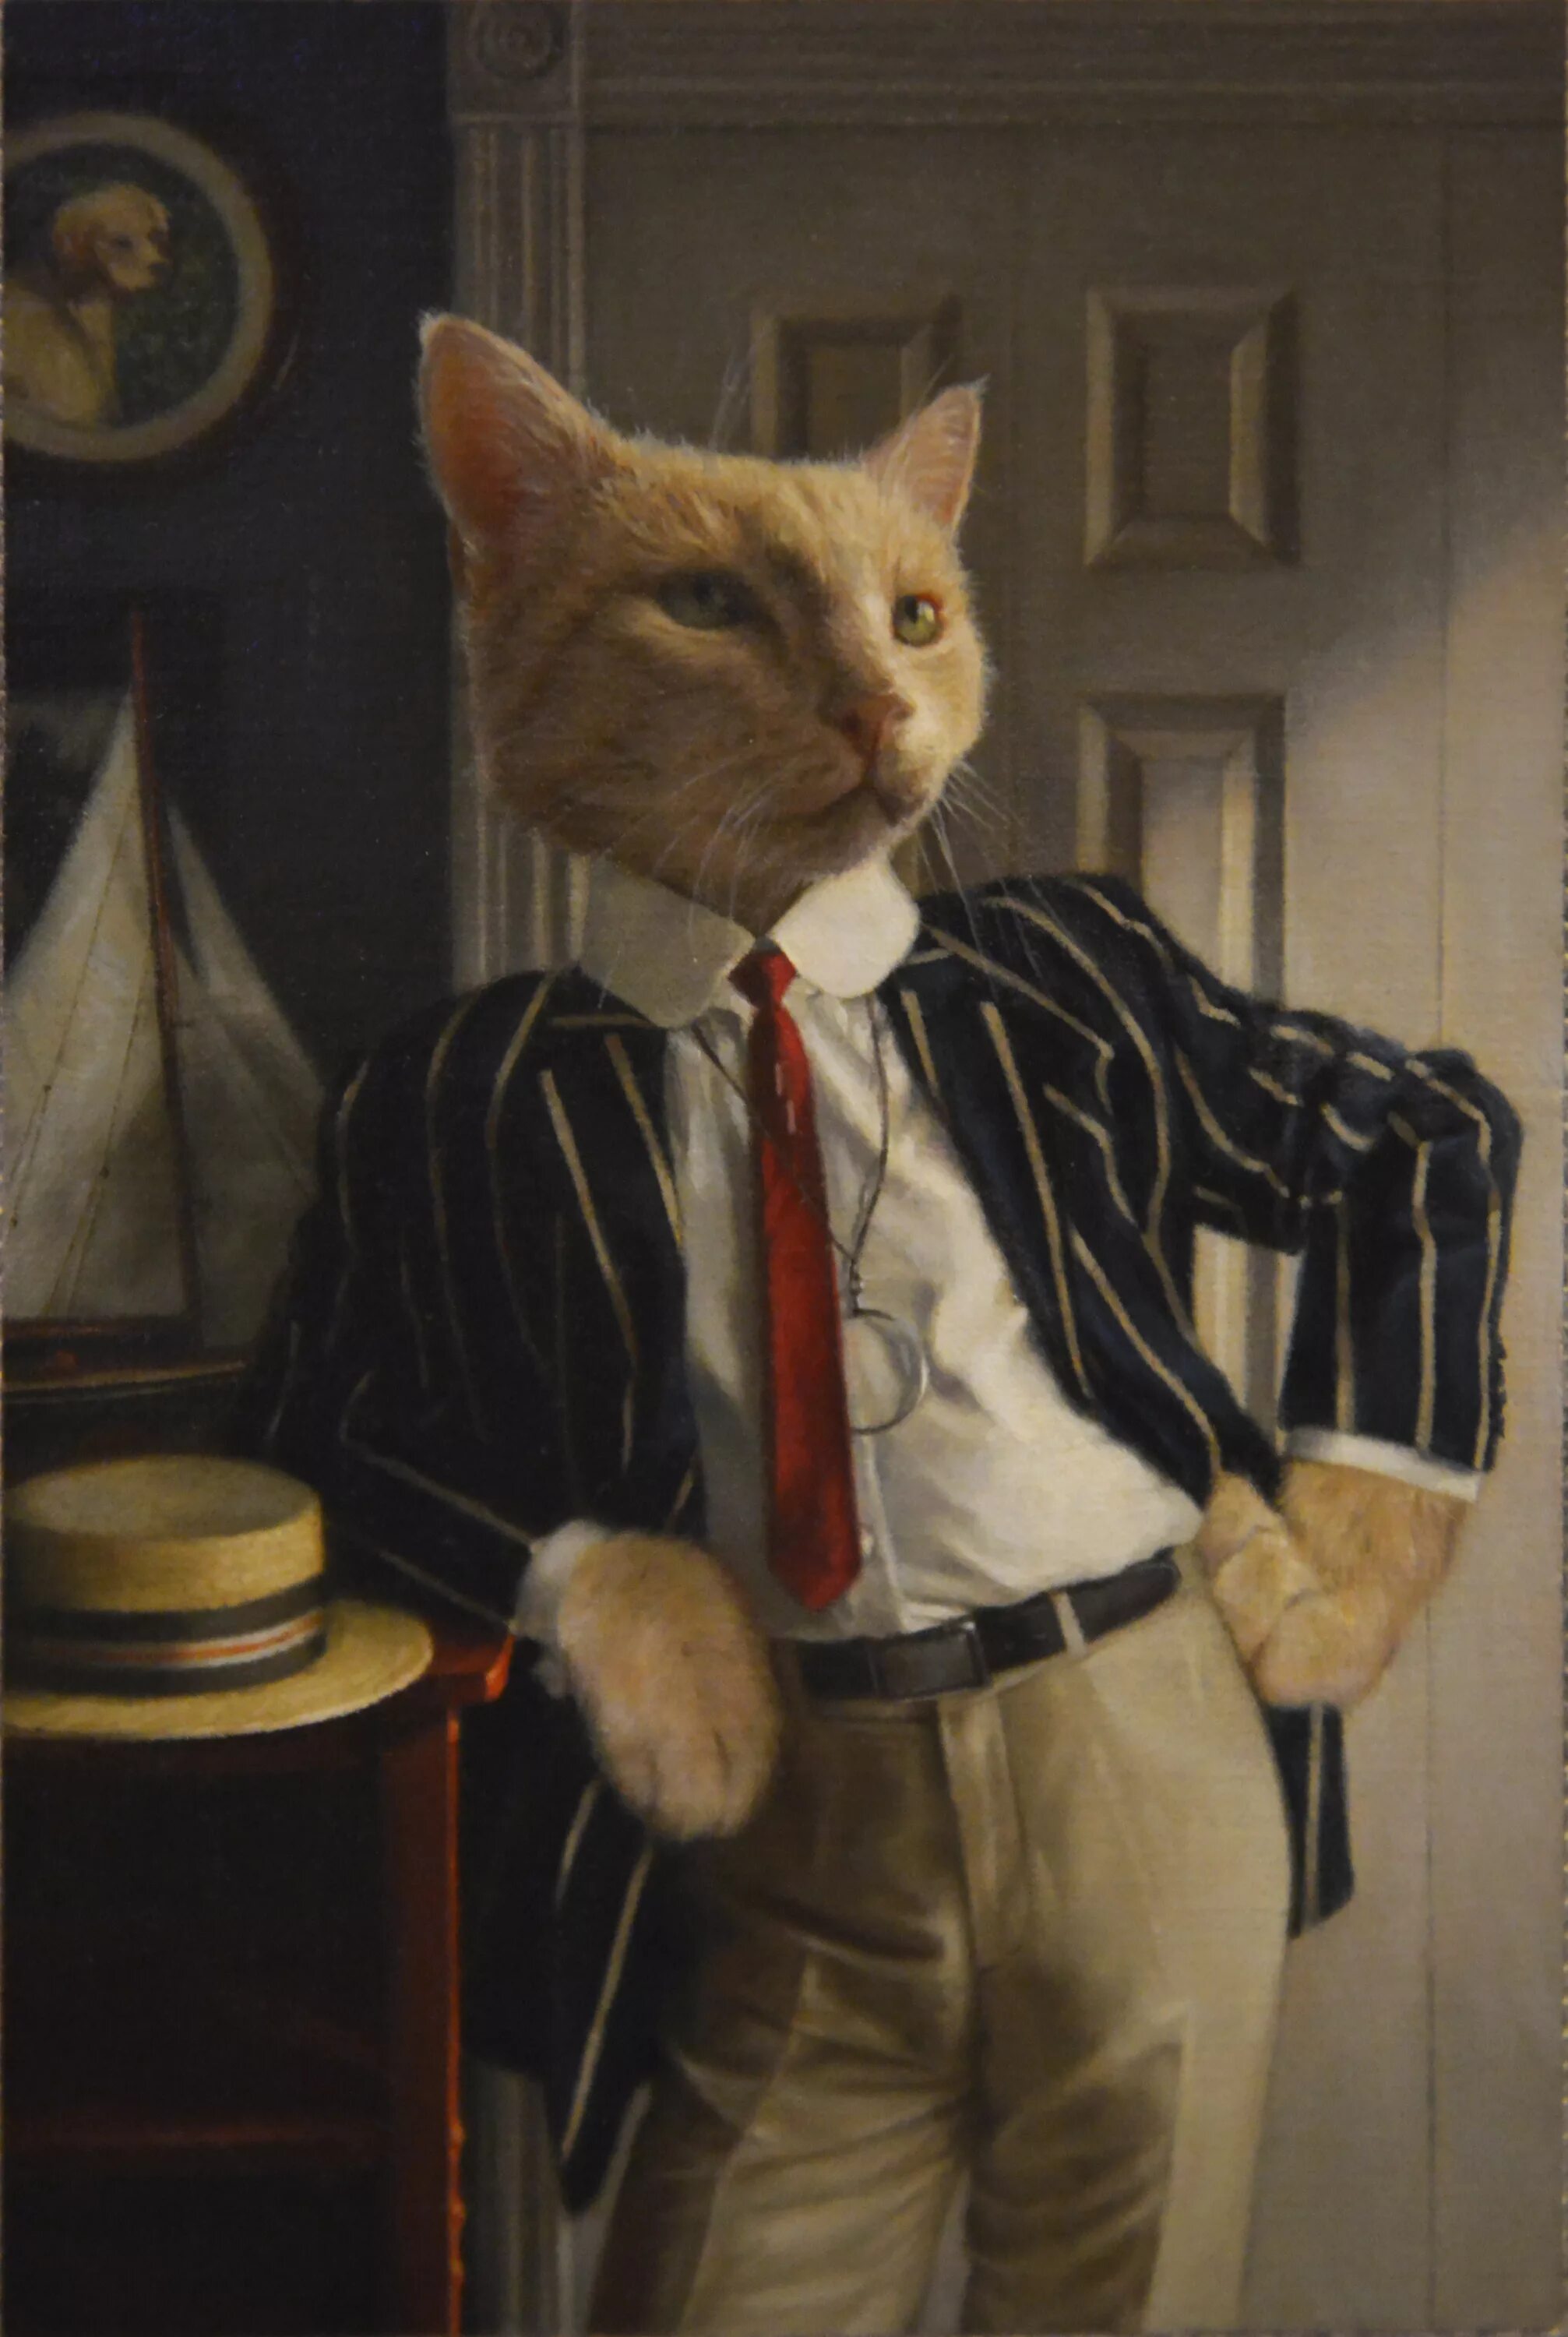 Кот джентльмен. Кот интеллигент. Кот в пиджаке. Коты Интеллигенты.